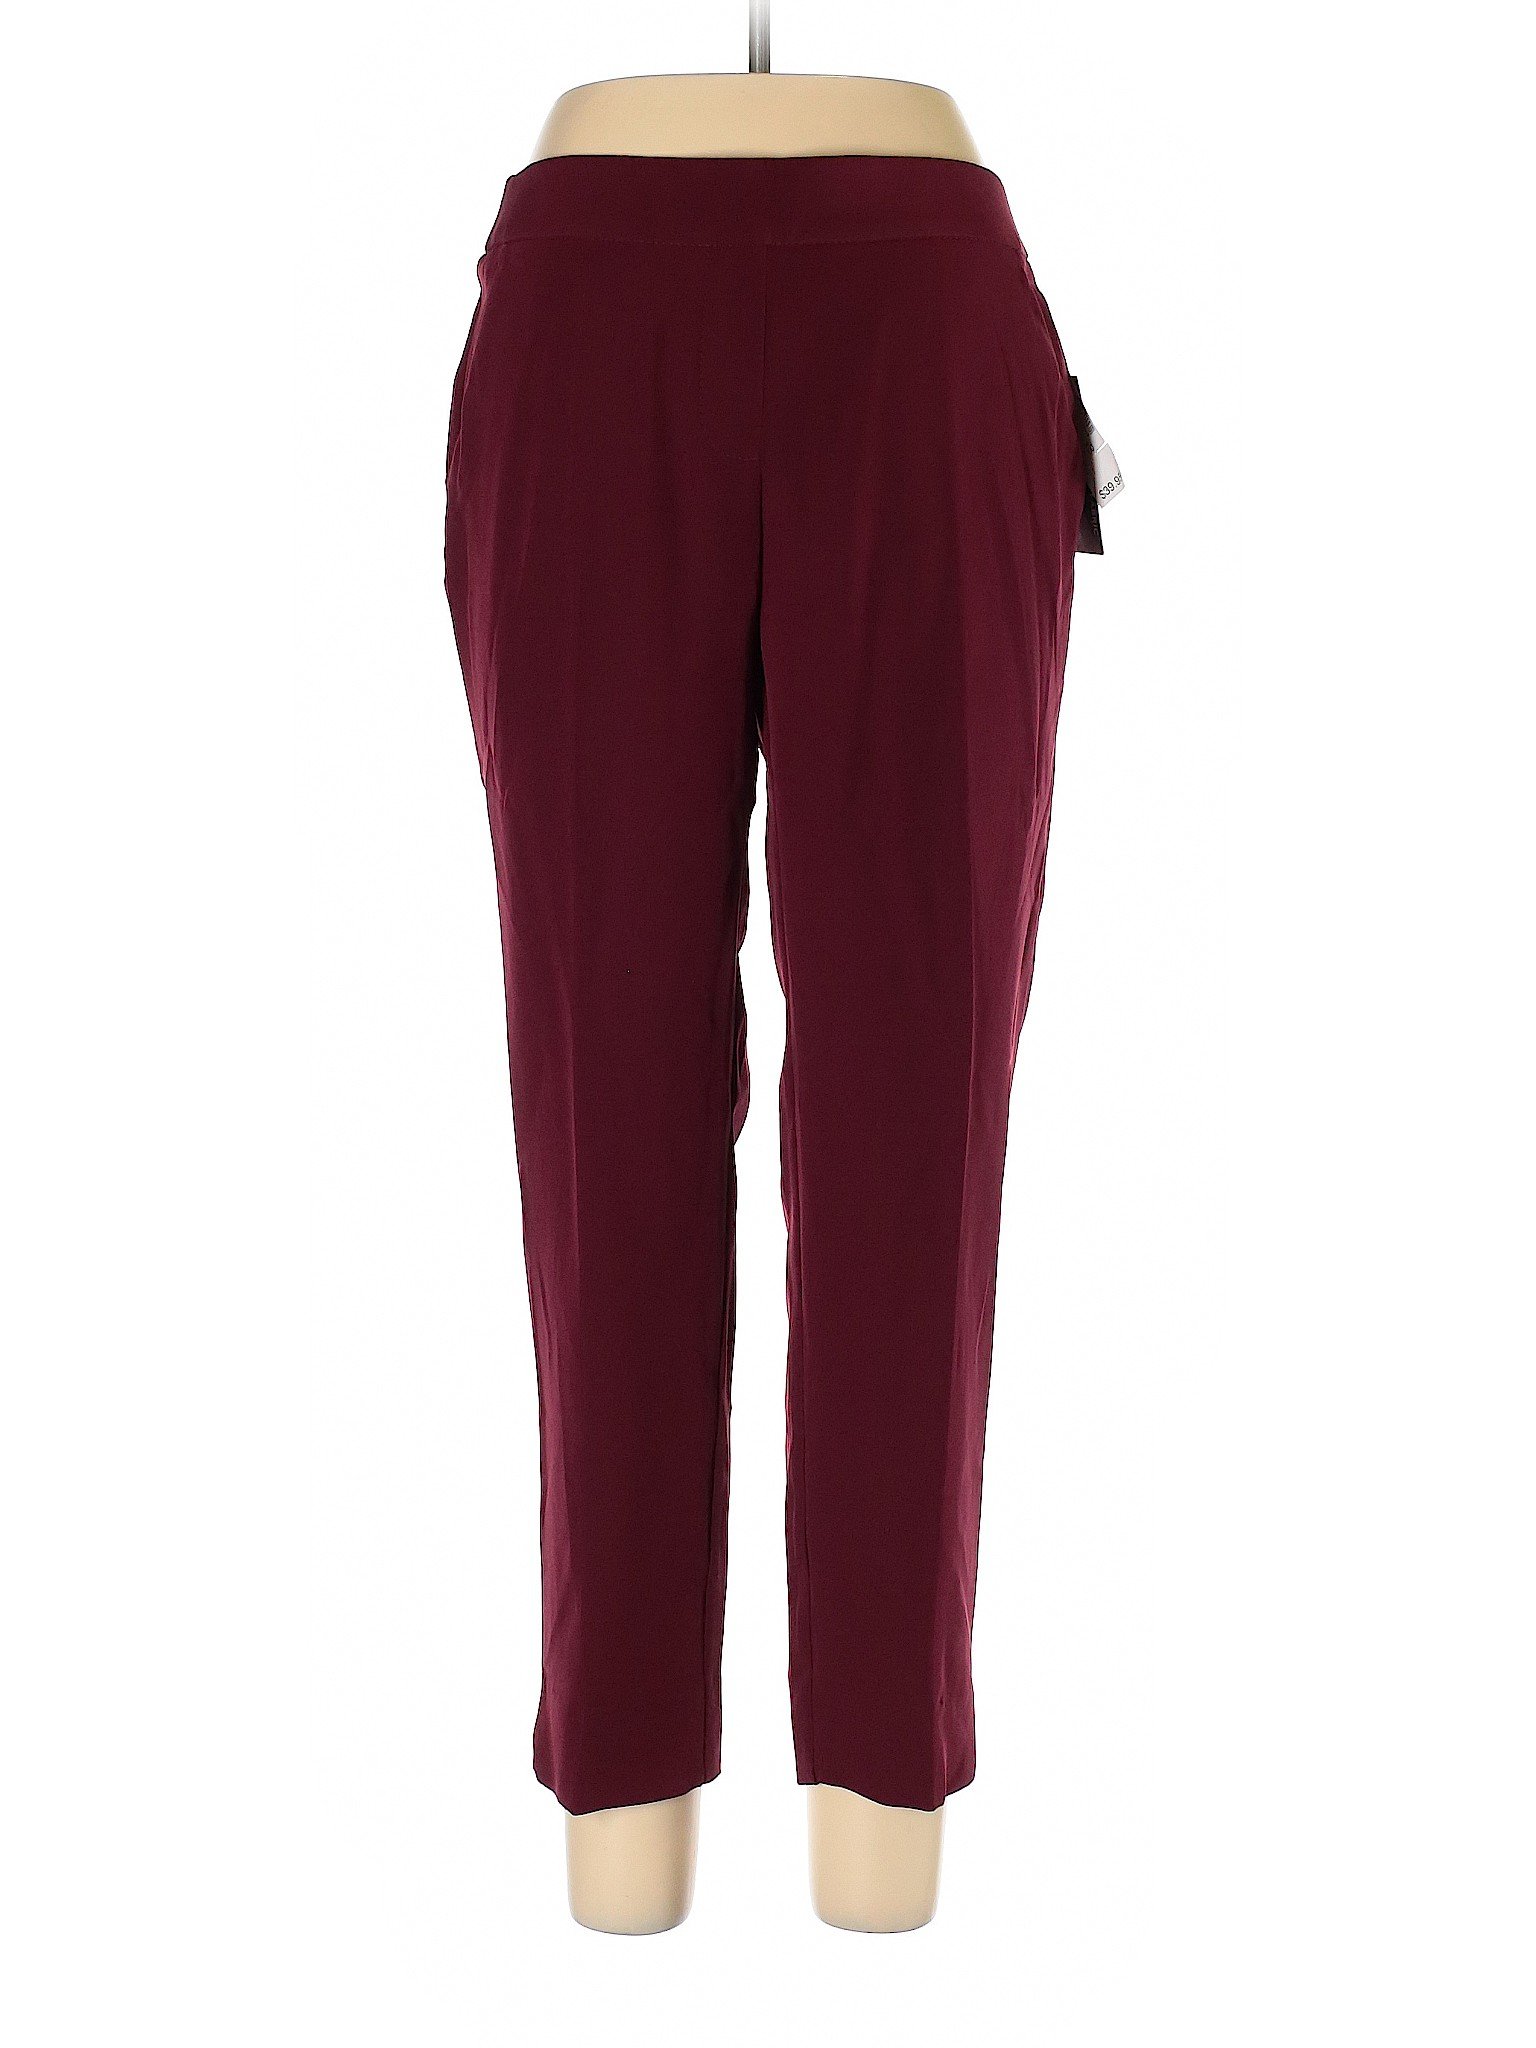 NWT Roz & Ali Women Red Dress Pants 10 | eBay